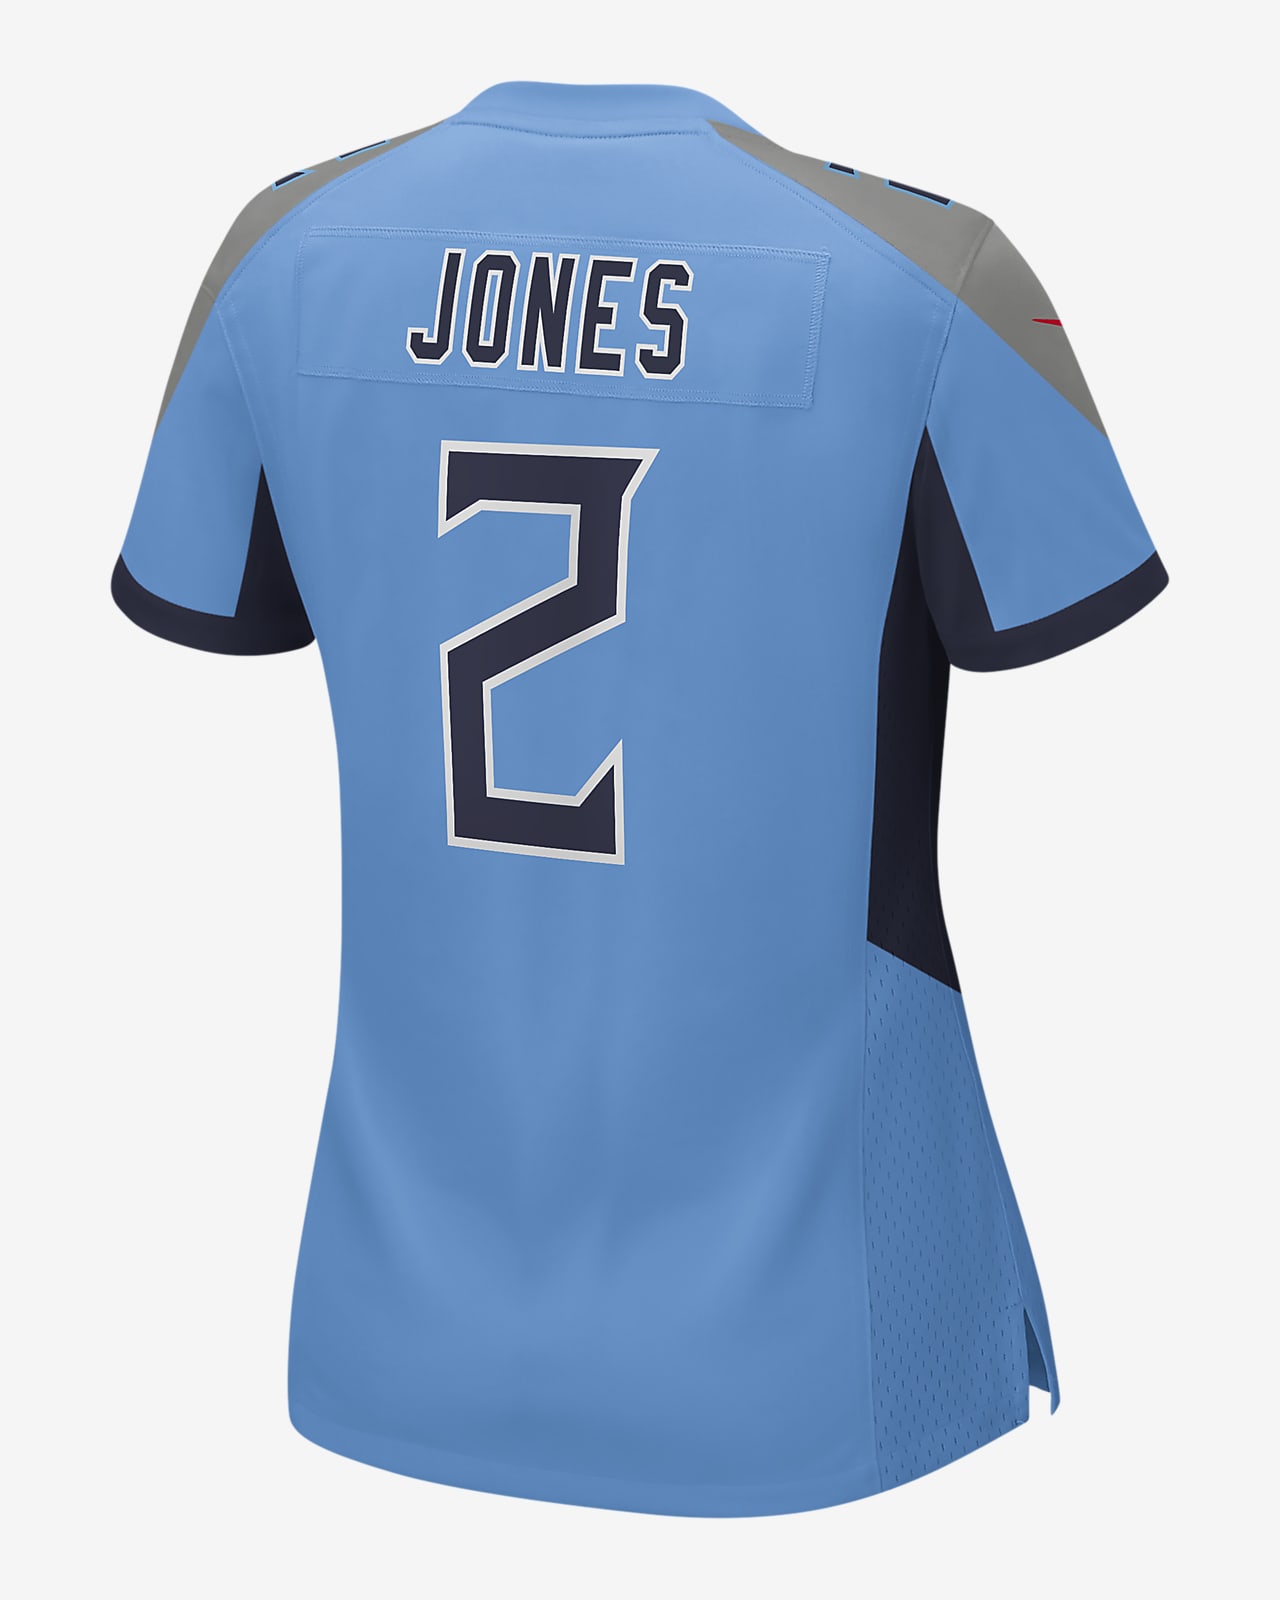 Julio Jones Titans Jerseys, Julio Jones Titans Shirt, Jersey, Gear